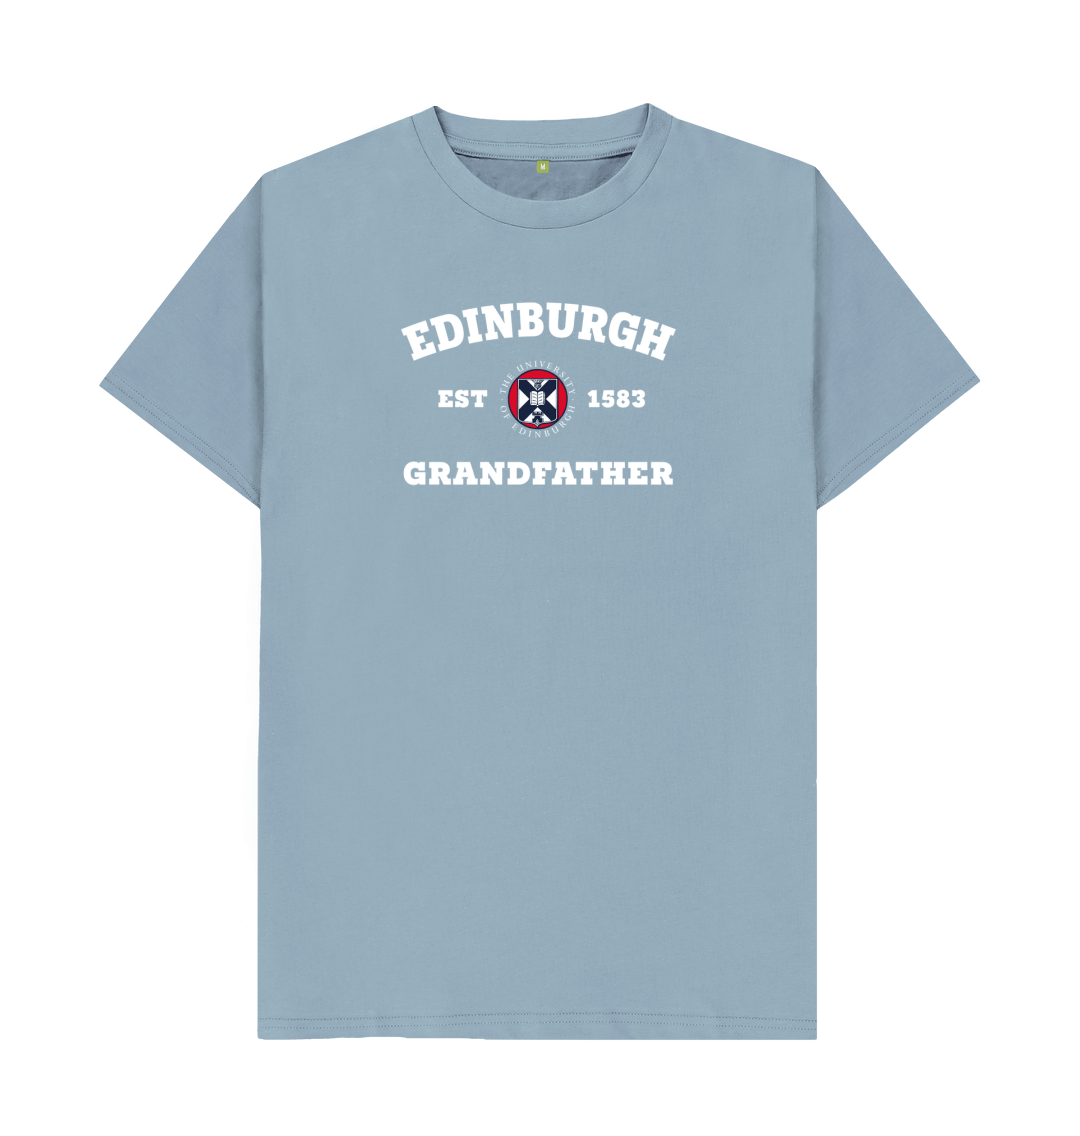 Edinburgh Grandfather T-shirt